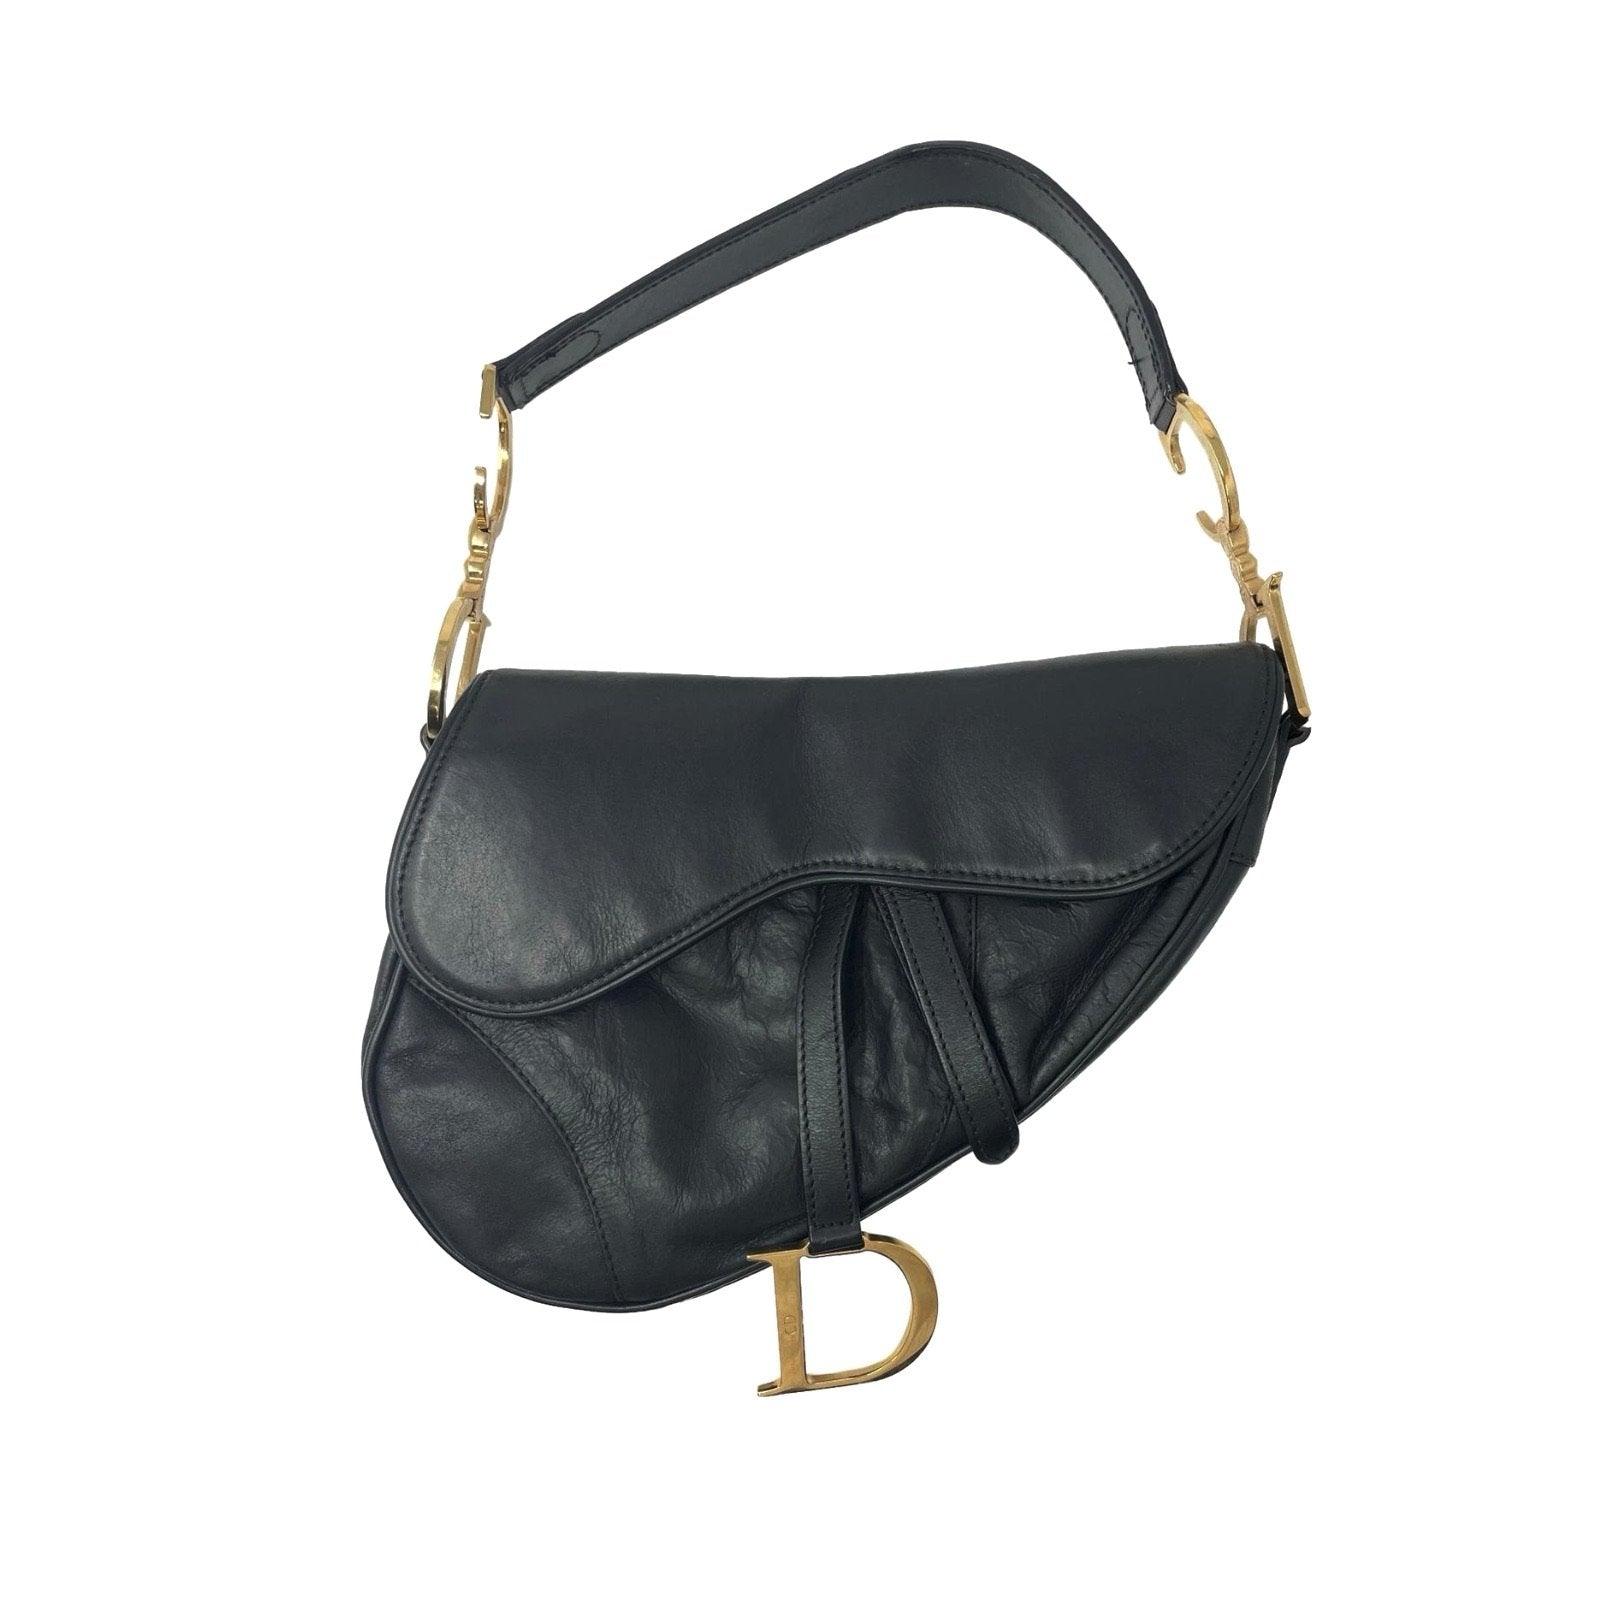 Dior Black Leather Saddle Bag - Handbags